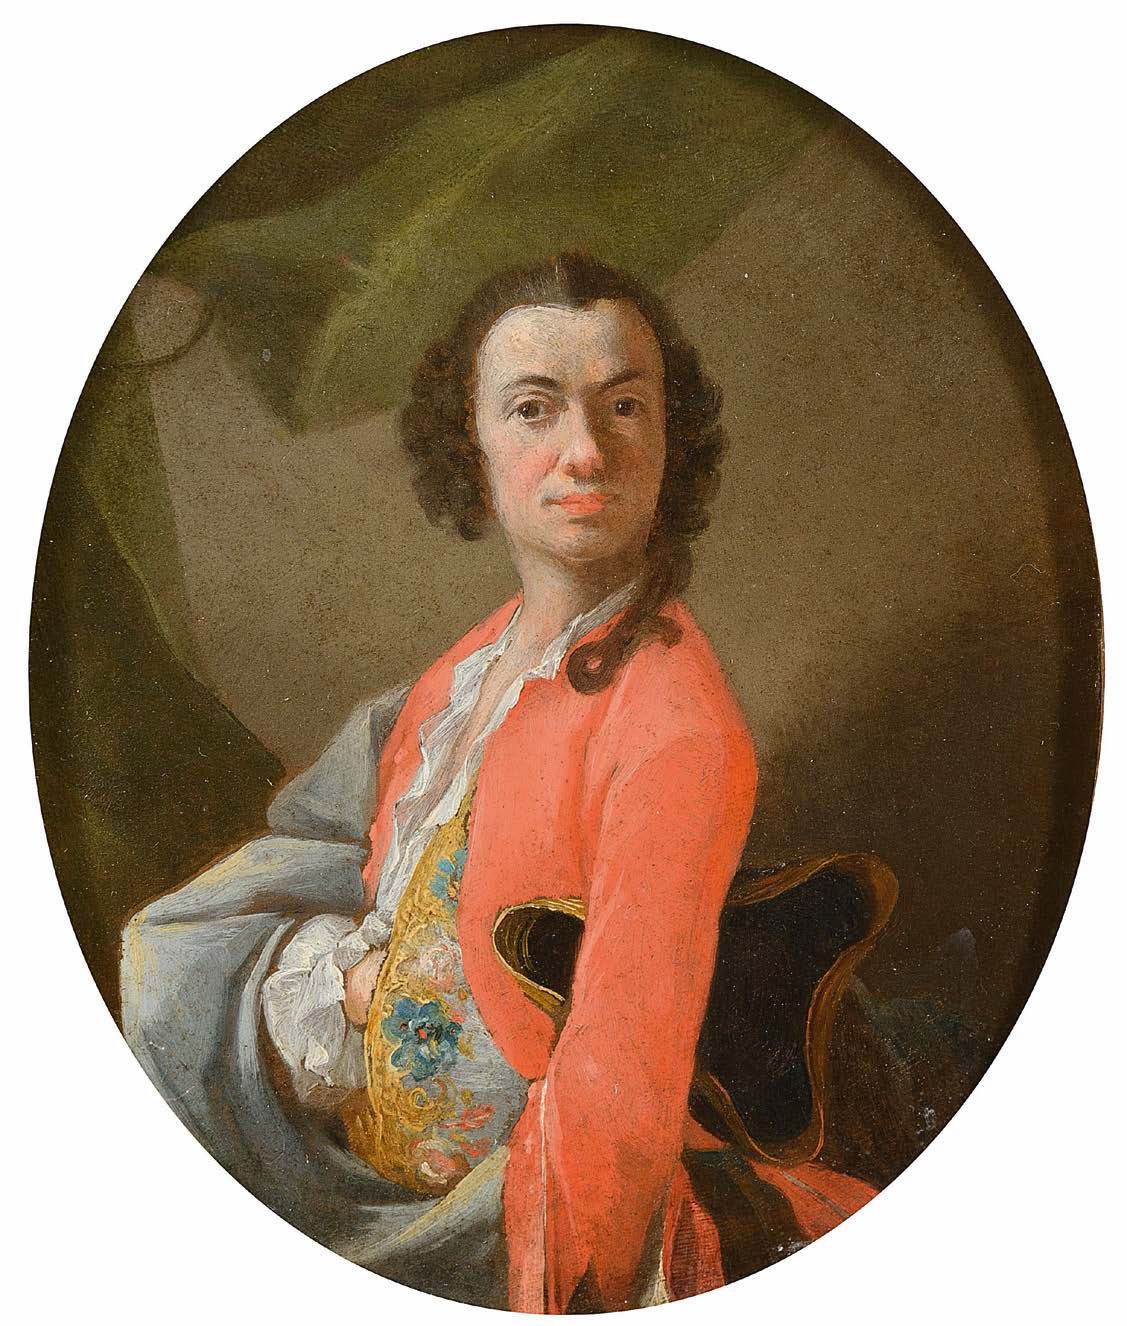 Filippo FALCIATORE (Naples 1718 - 1768) 自画像
椭圆形铜板 17.5 x 14.5 cm
注：
菲利普-法尔西亚托雷是保&hellip;